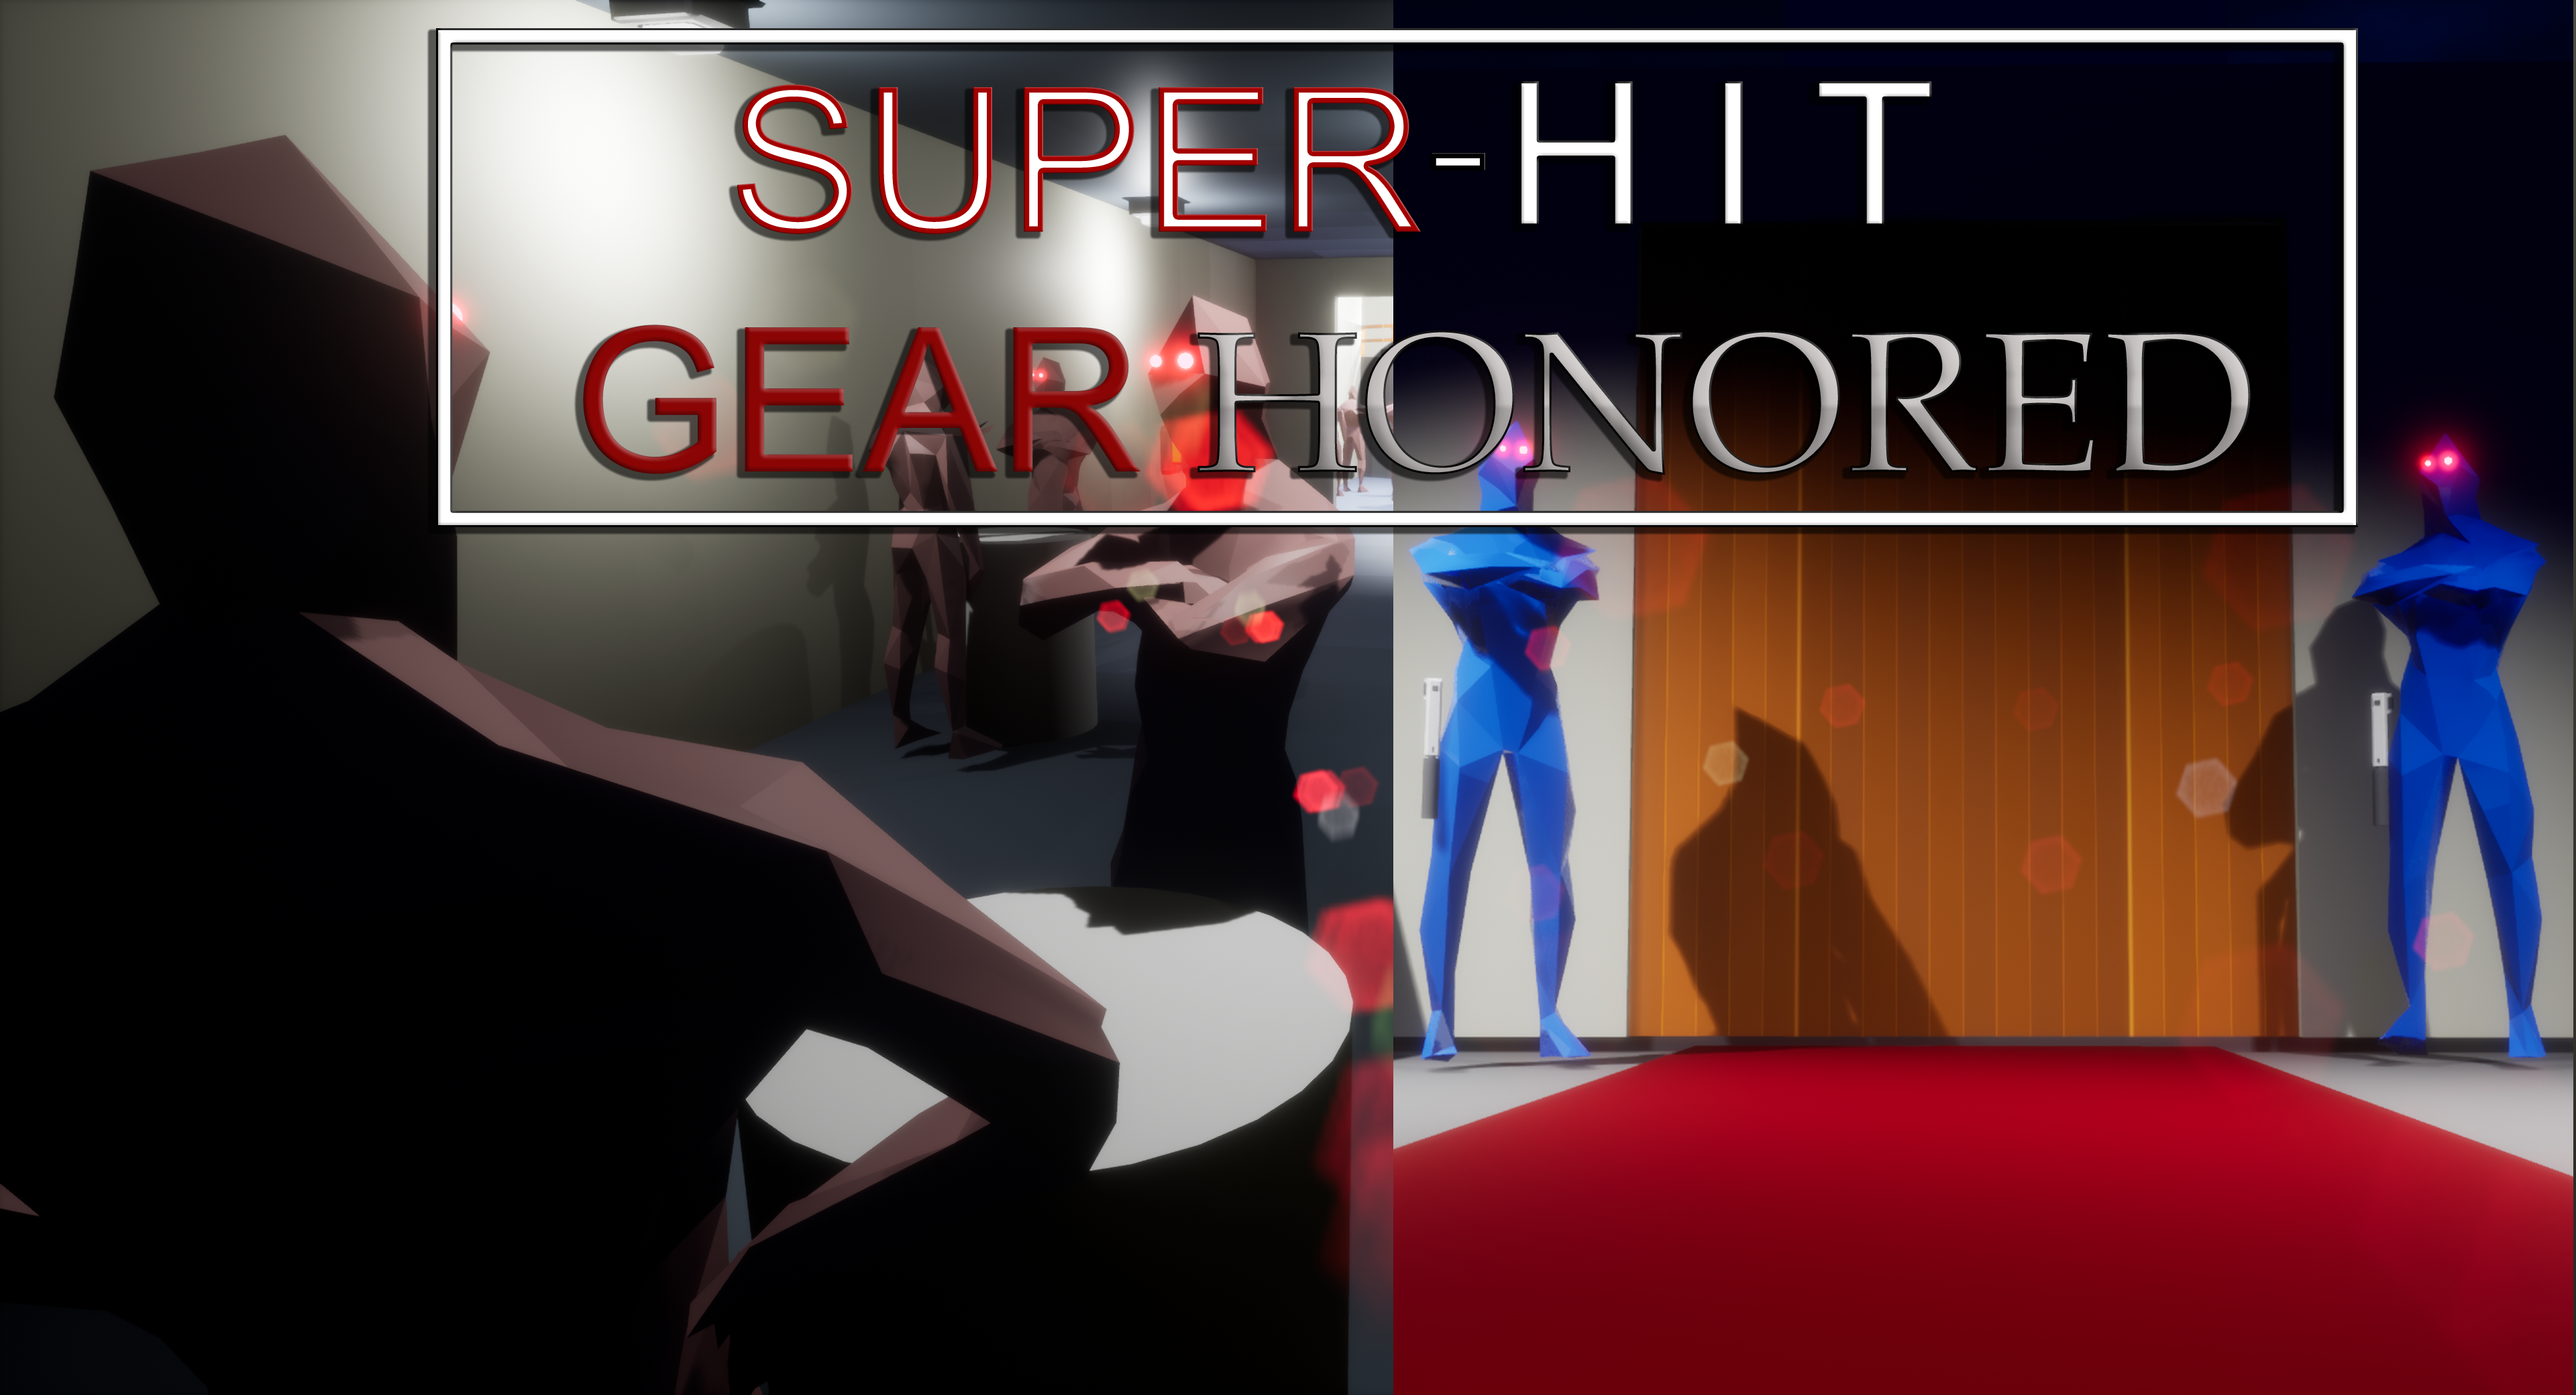 SUPER-HIT GEAR HONORED v2.6